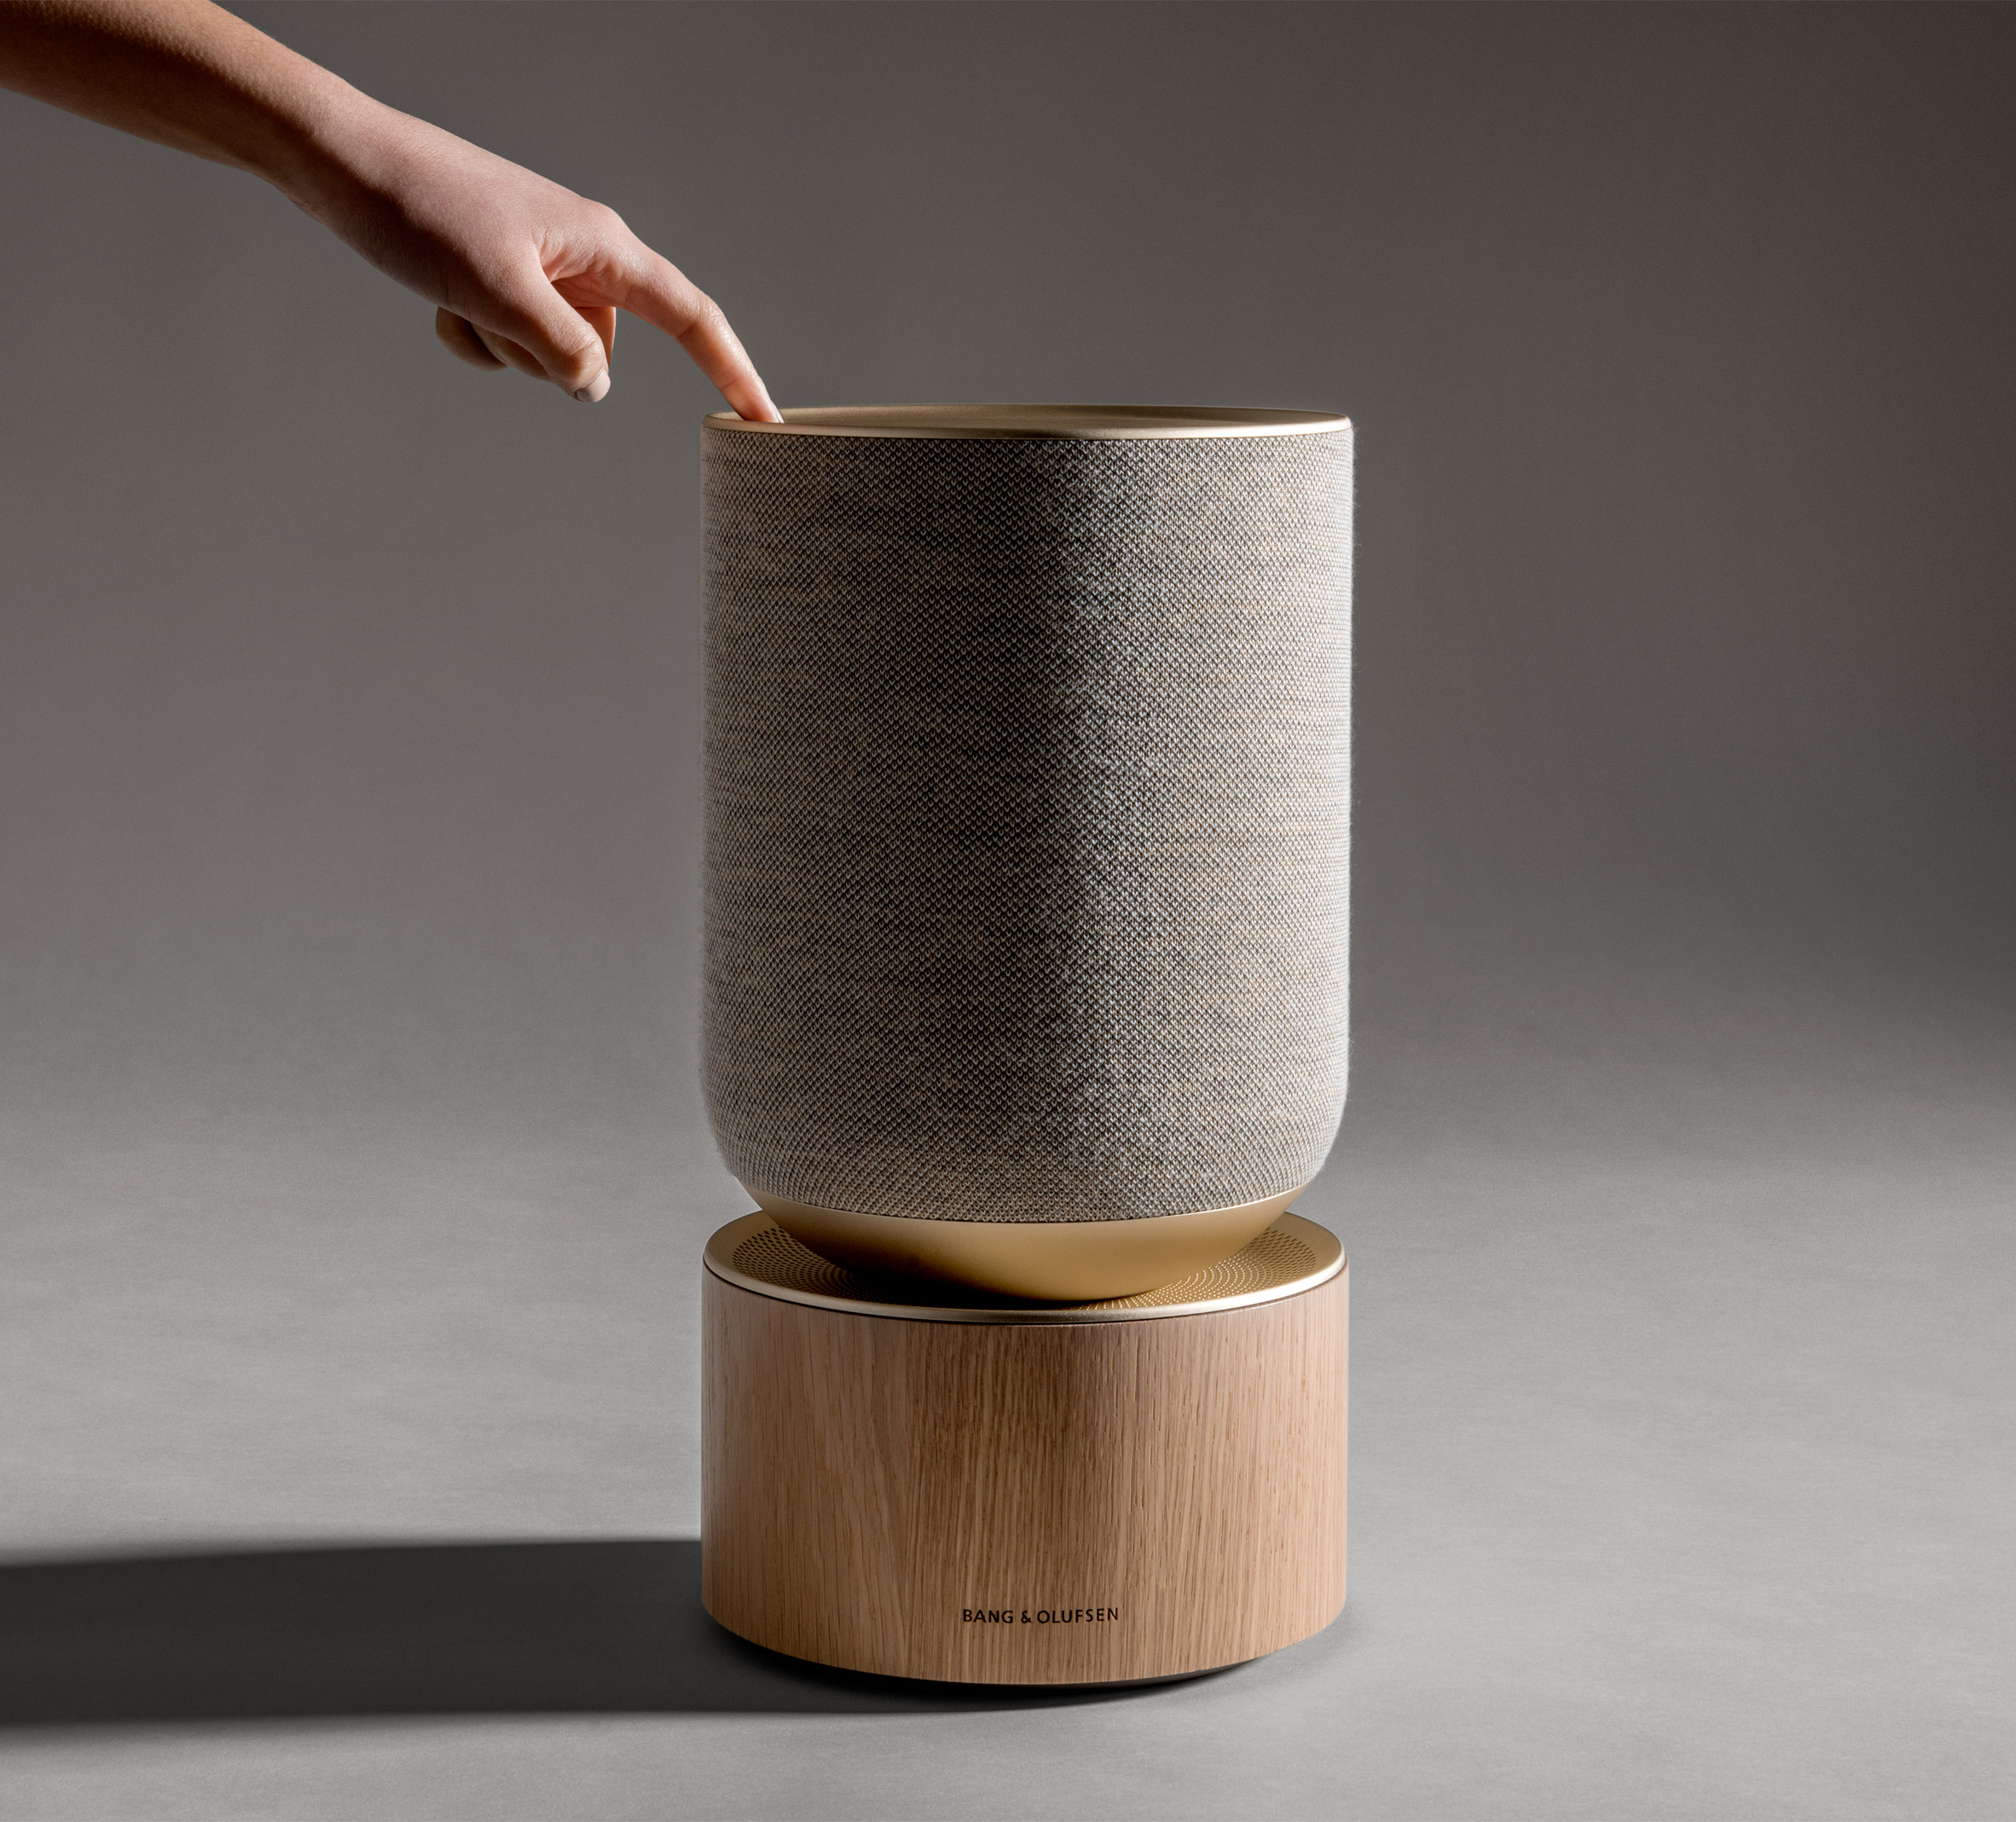 Bijwerken Opnemen Staat Layer crafts Bang & Olufsen speaker from solid timber and textile